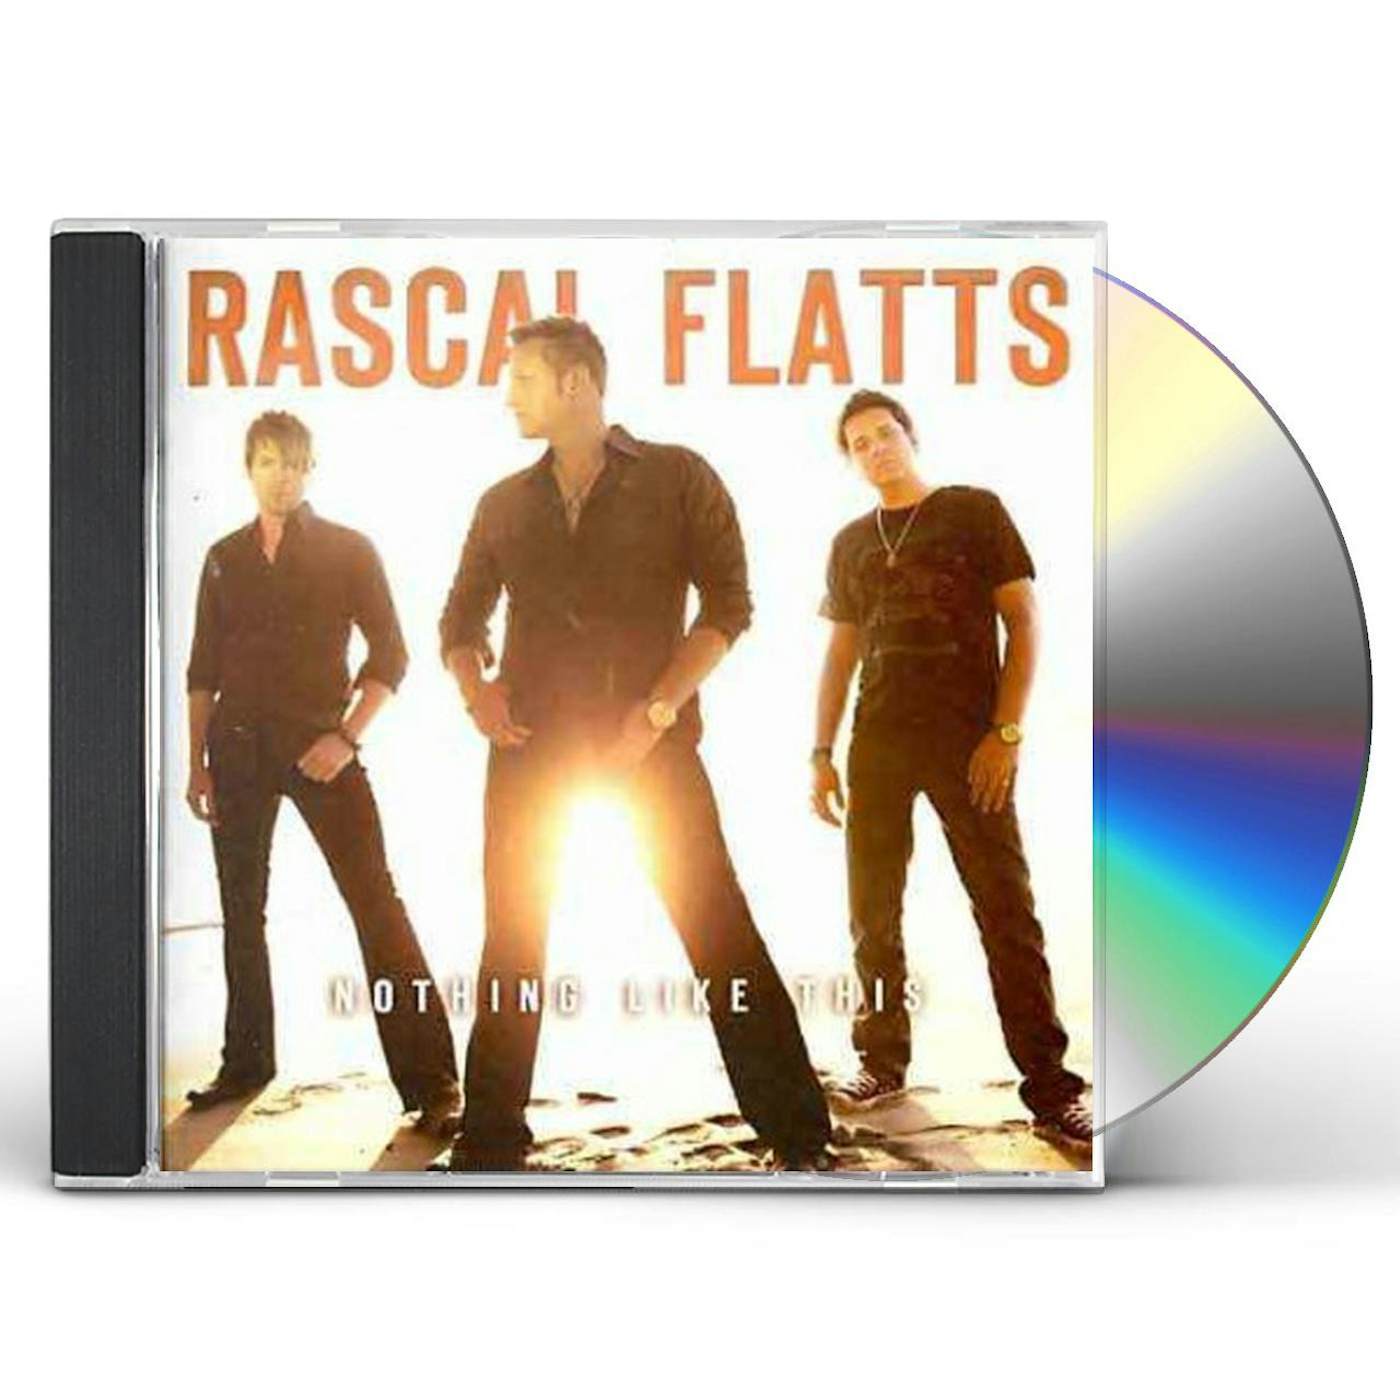 Rascal Flatts NOTHING LIKE THIS CD